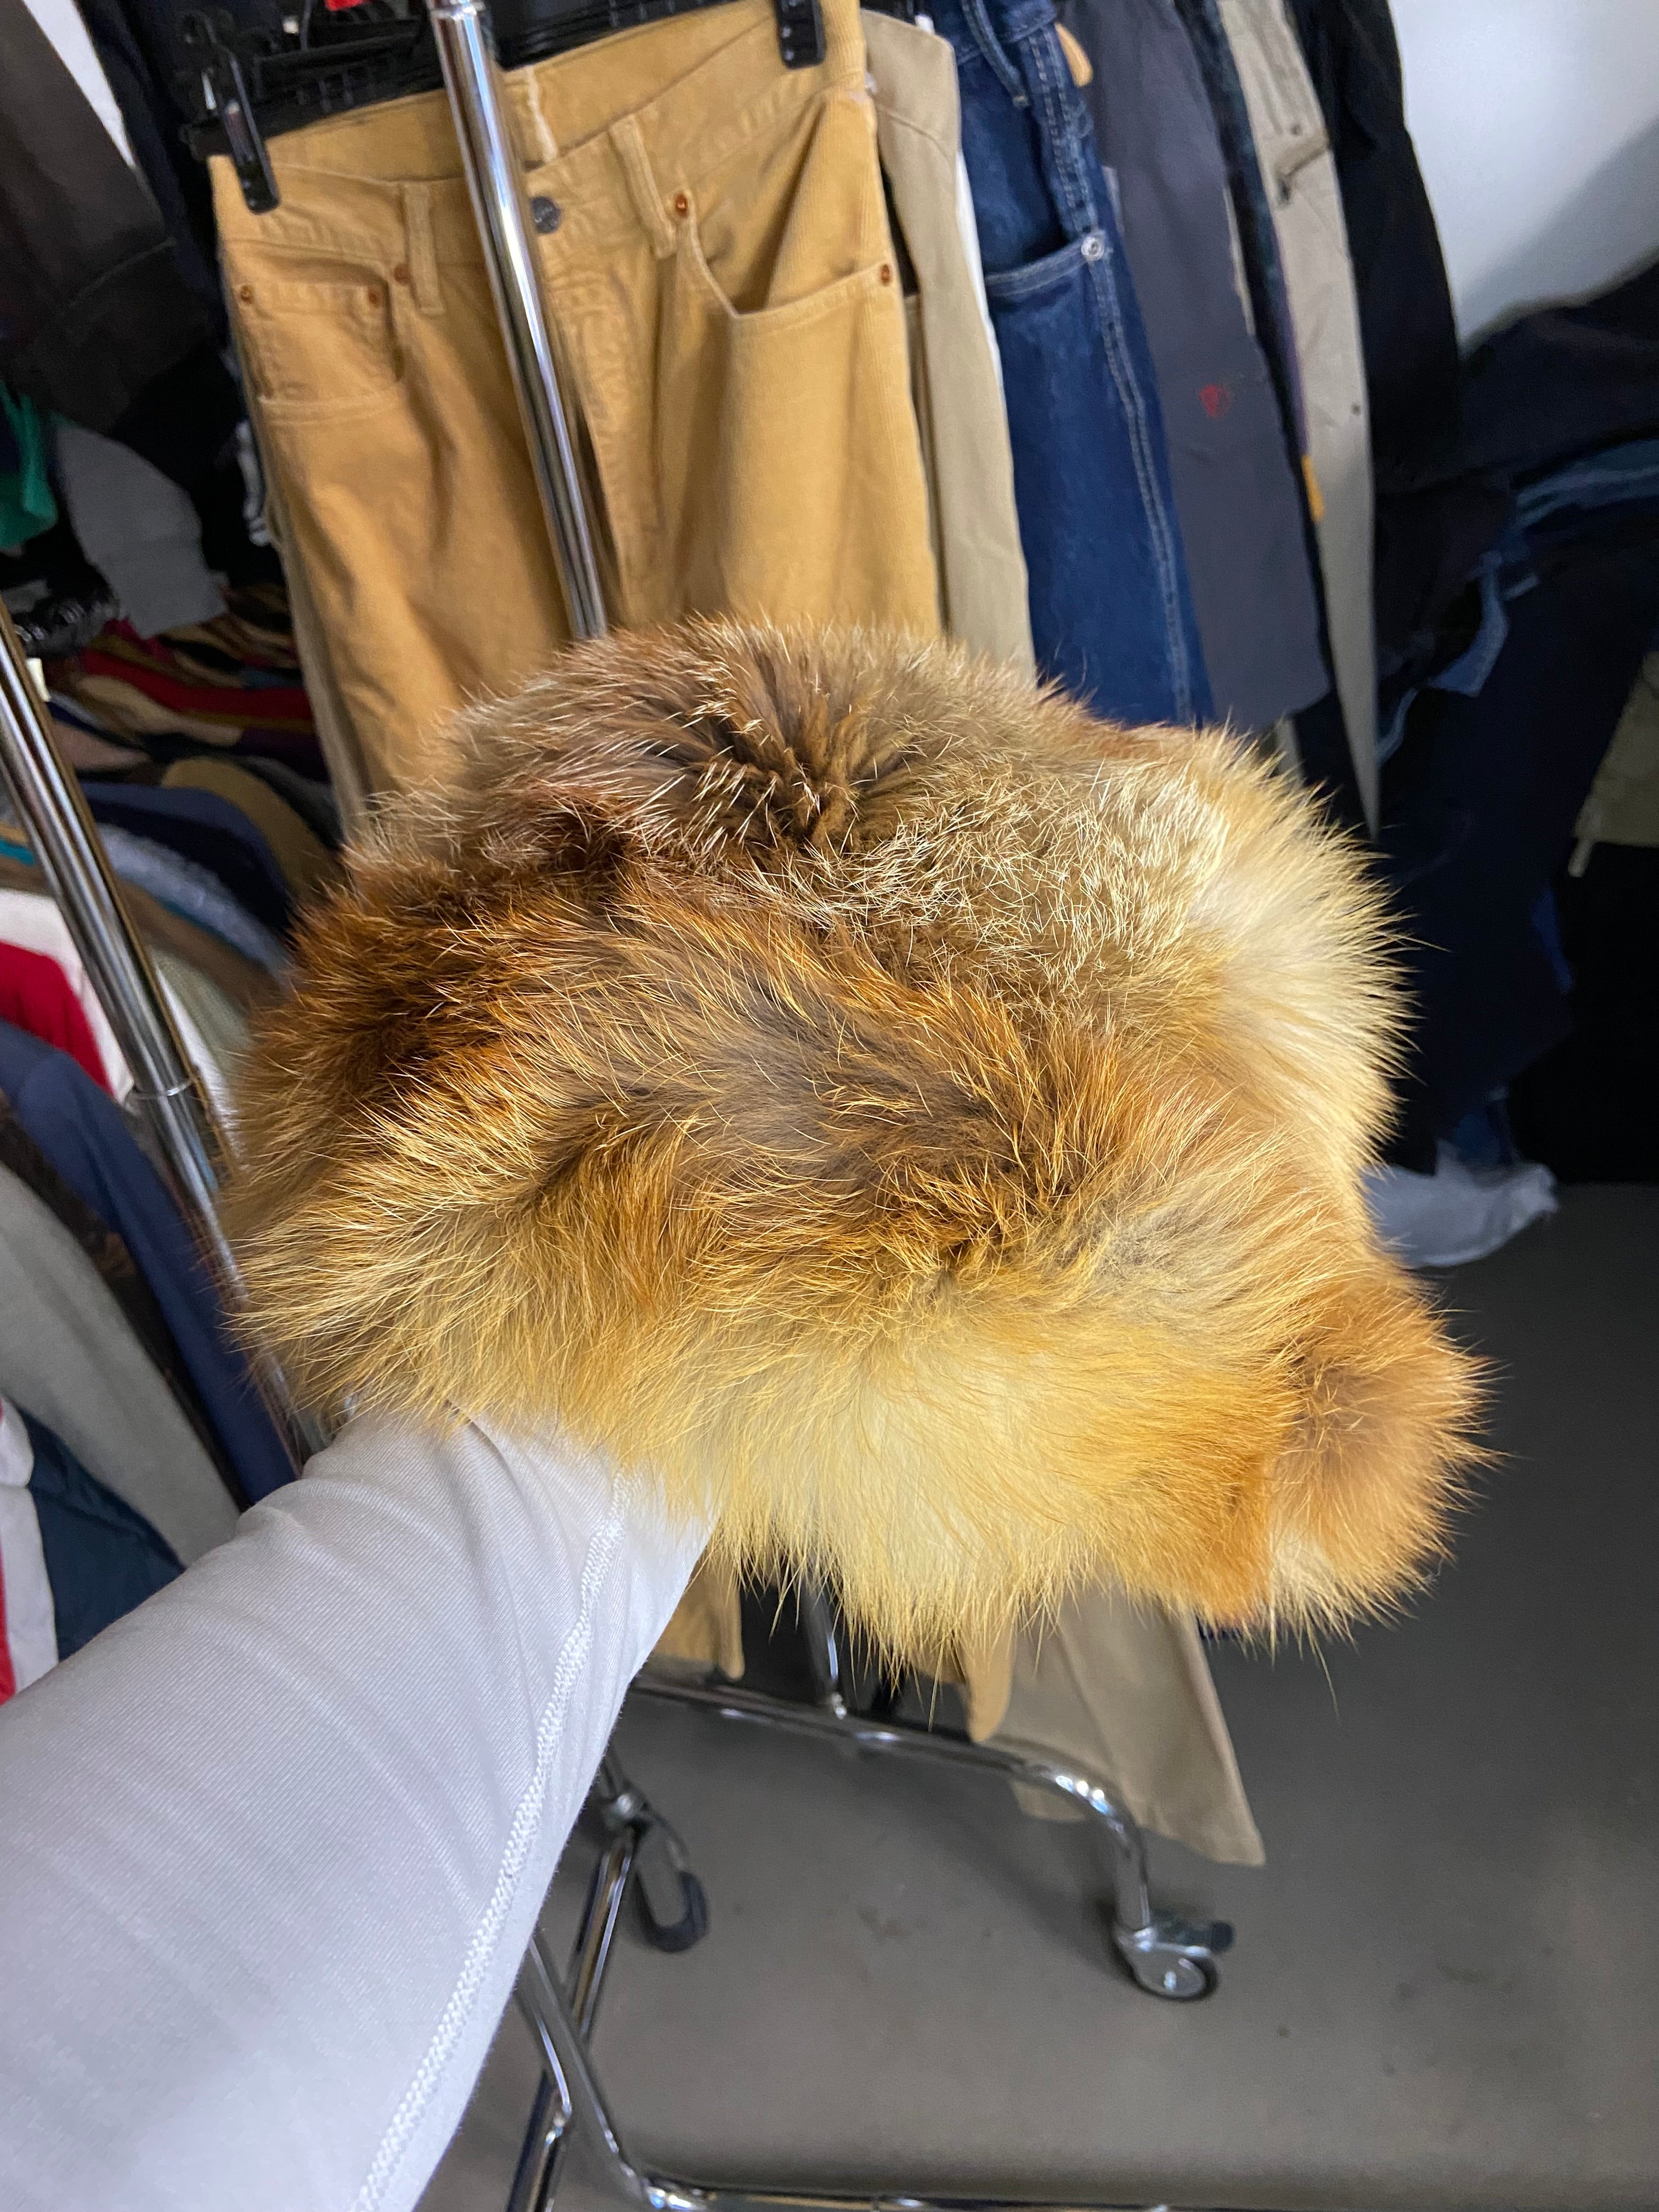 Luxurious Vintage Light Brown Fox Fur Hat - Snug 59 cm Fit for Winter Elegance